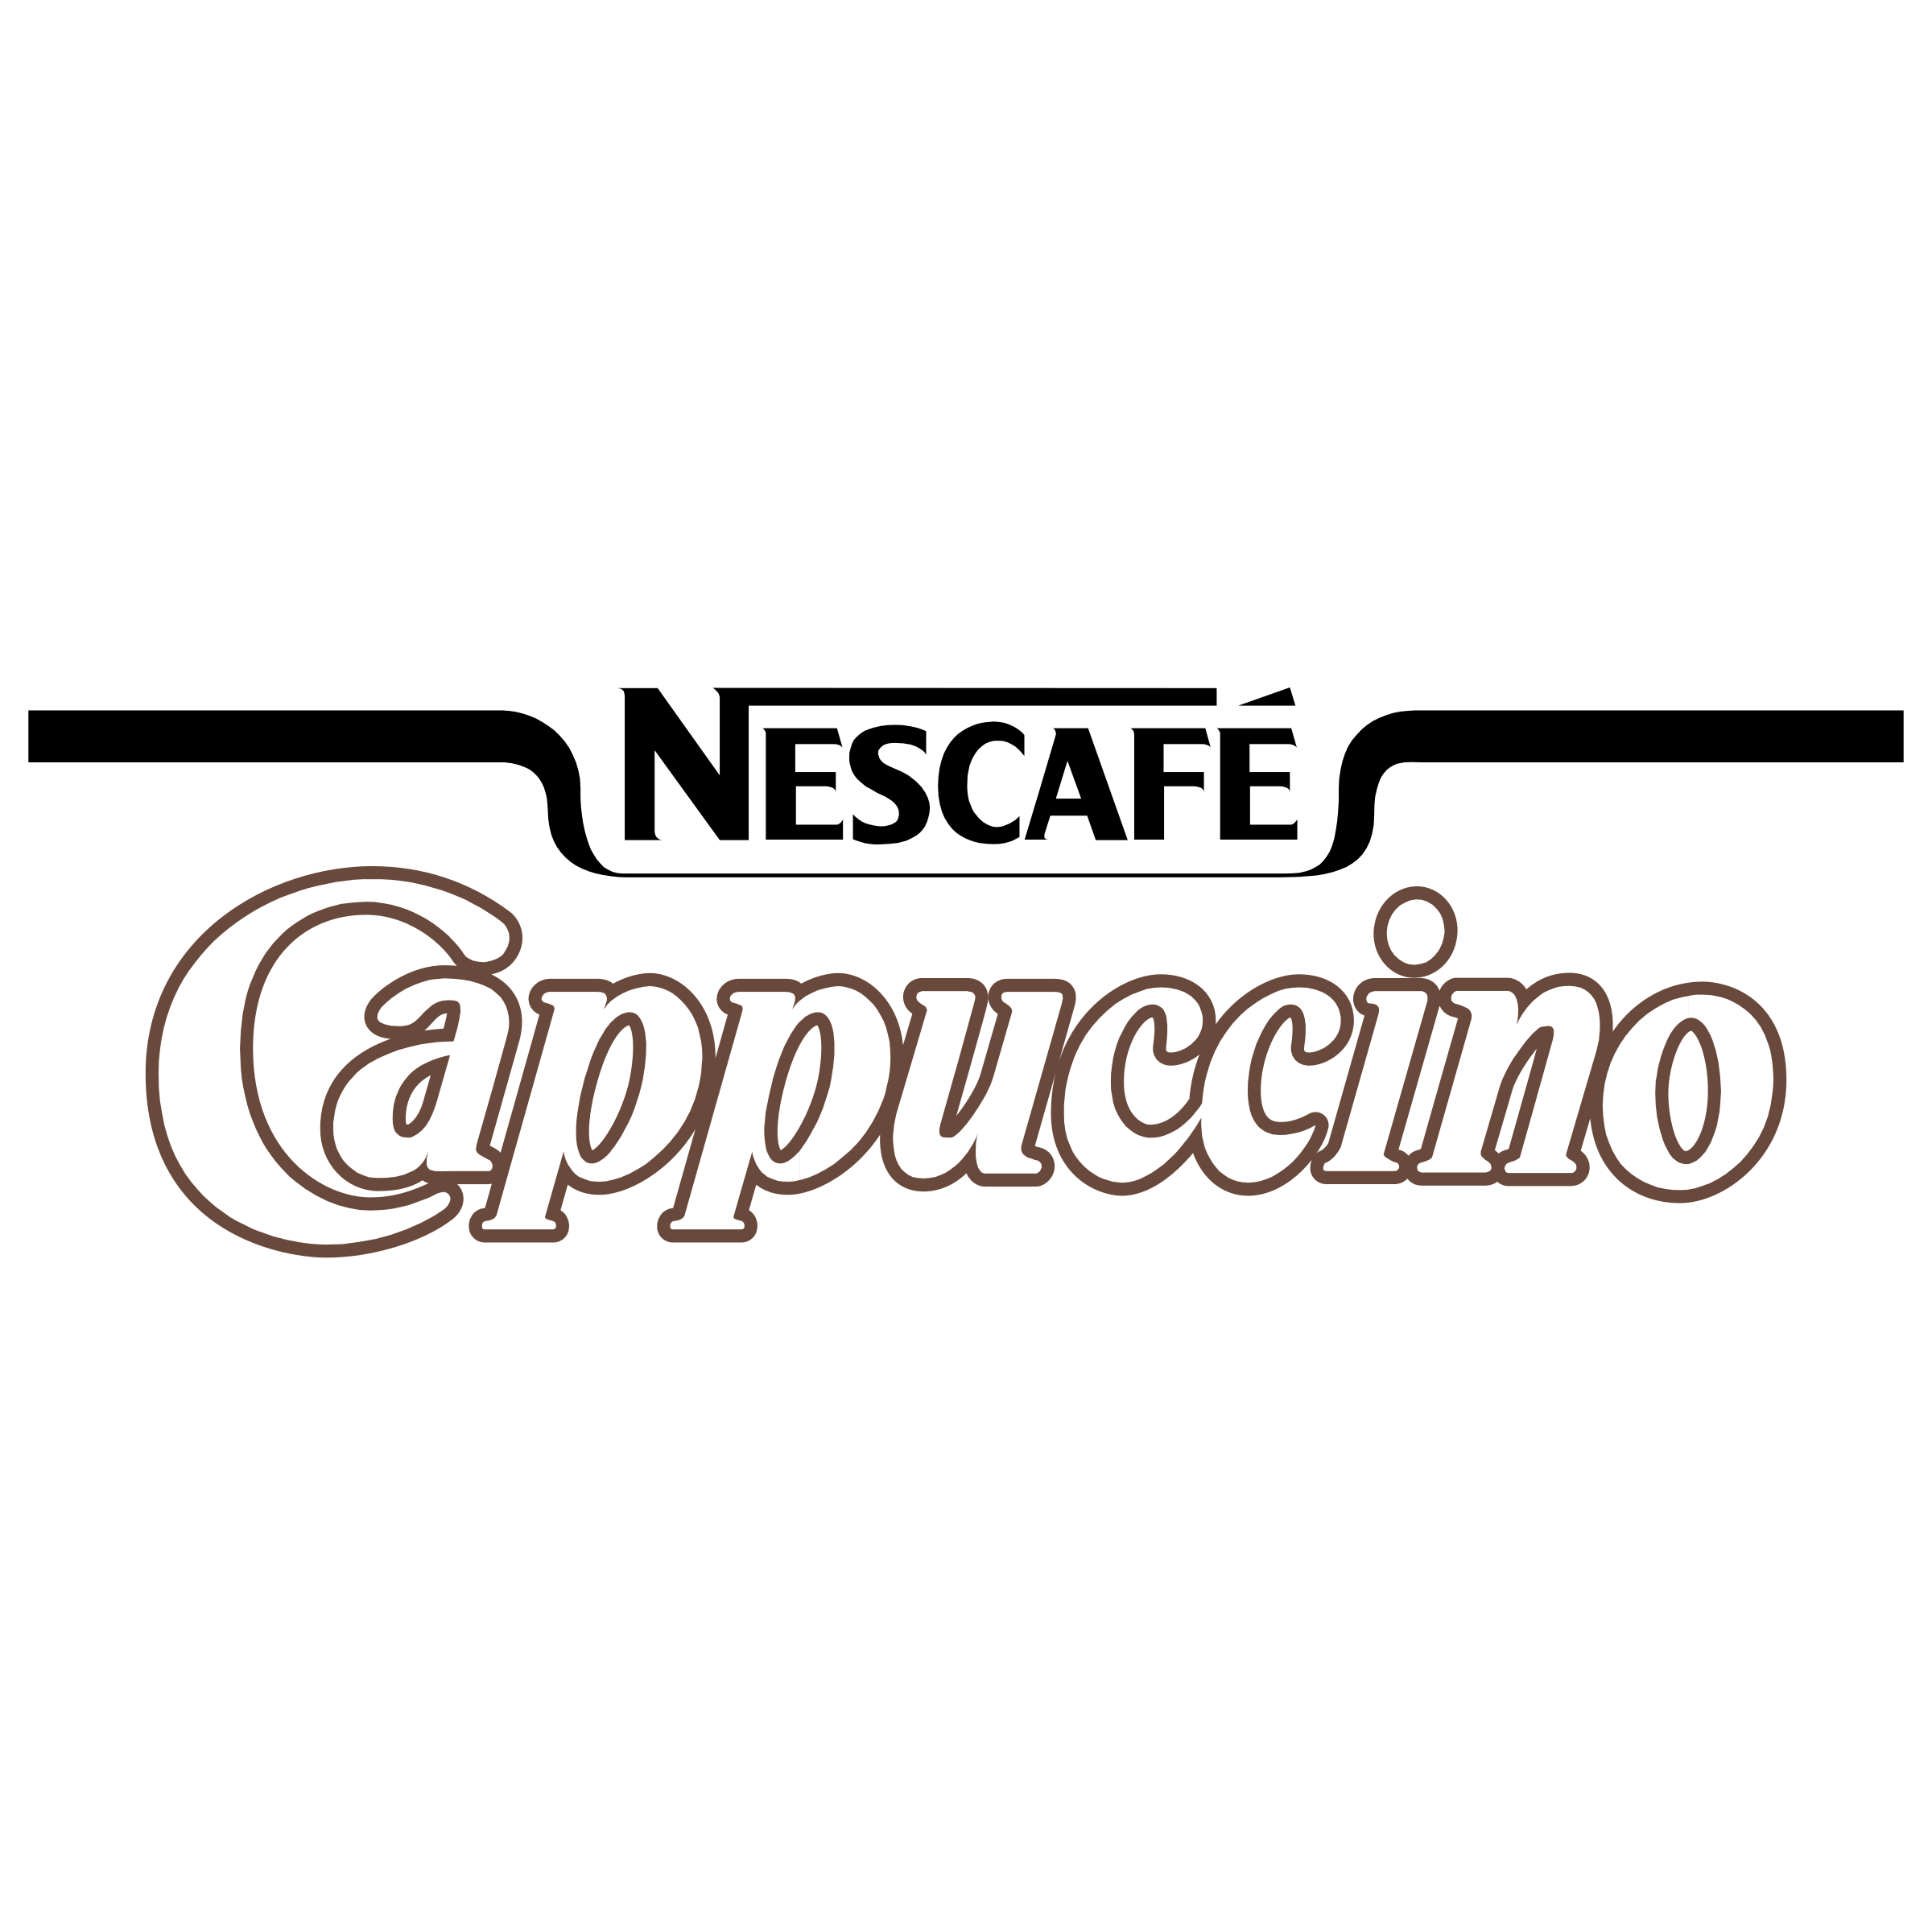 Cappuccino Logo - Nescafe Cappuccino Logo PNG Transparent & SVG Vector - Freebie Supply